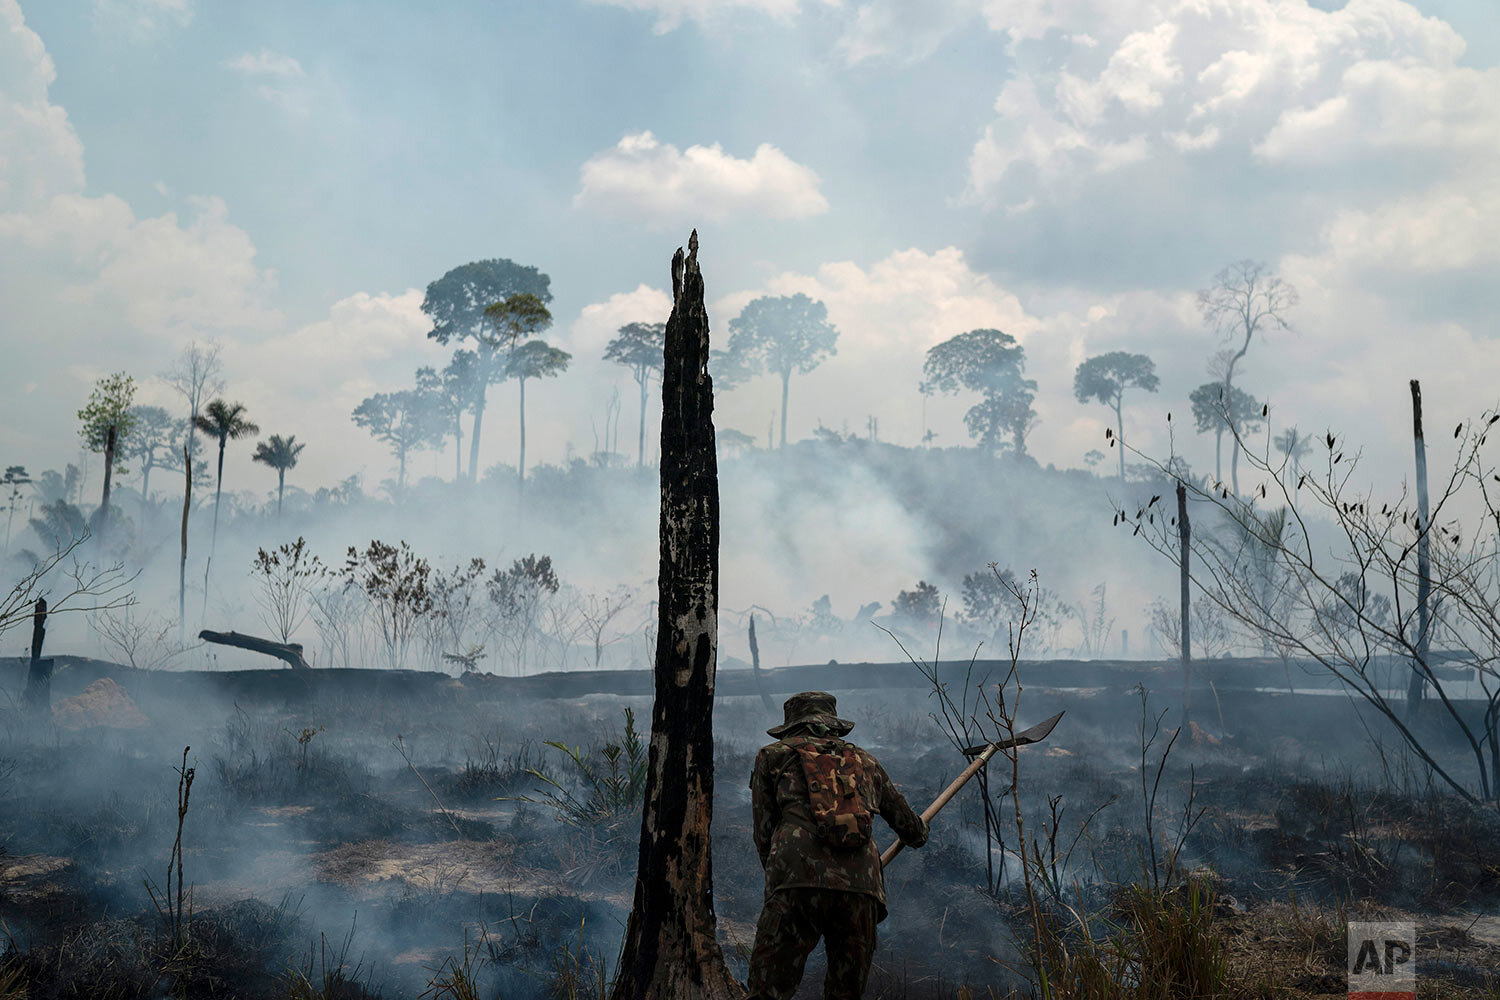  A Brazilian soldier puts out fires at the Nova Fronteira region in Novo Progresso, Brazil, on Sept. 3, 2019. (AP Photo/Leo Correa) 